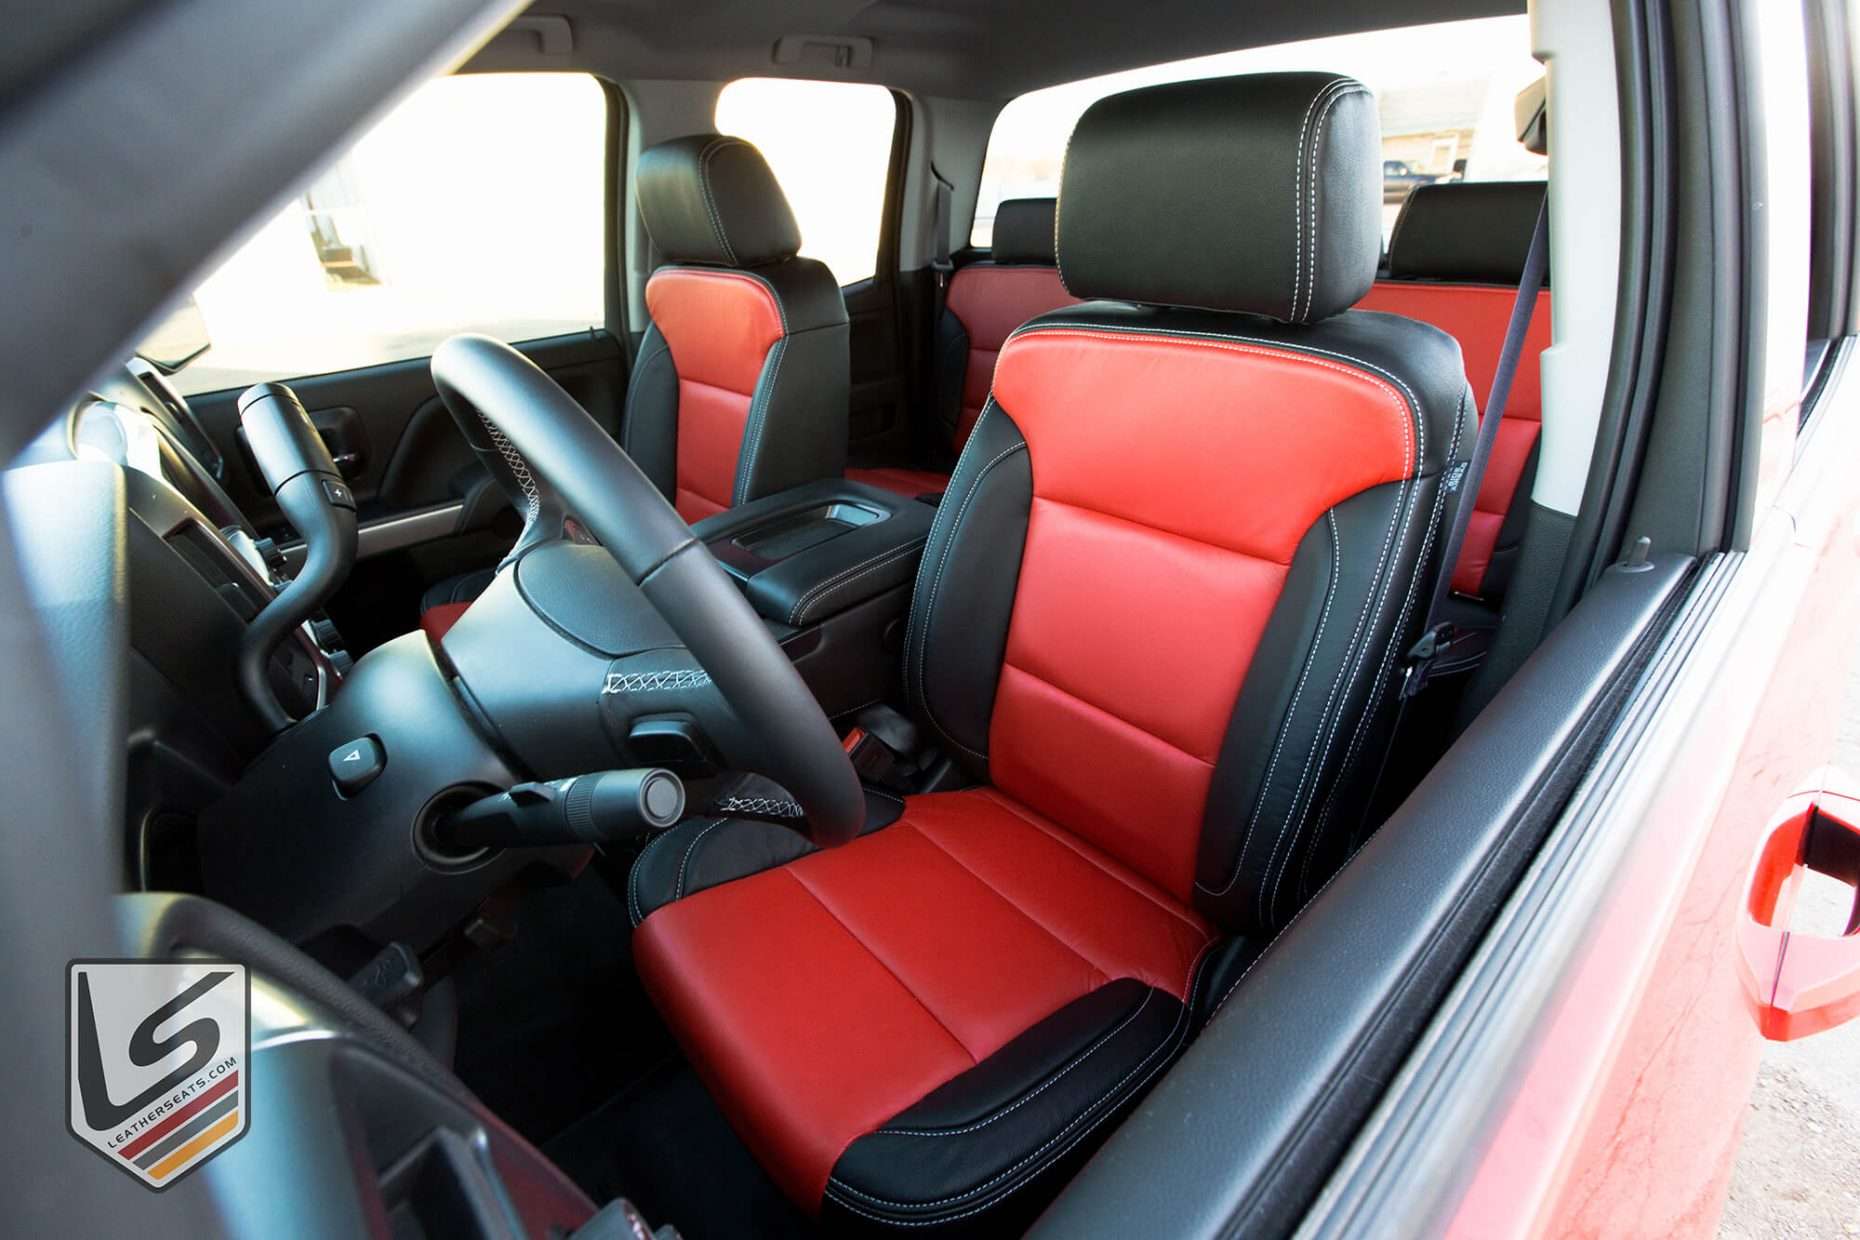 Chevy Silverado with Black & Bright Red leather interior